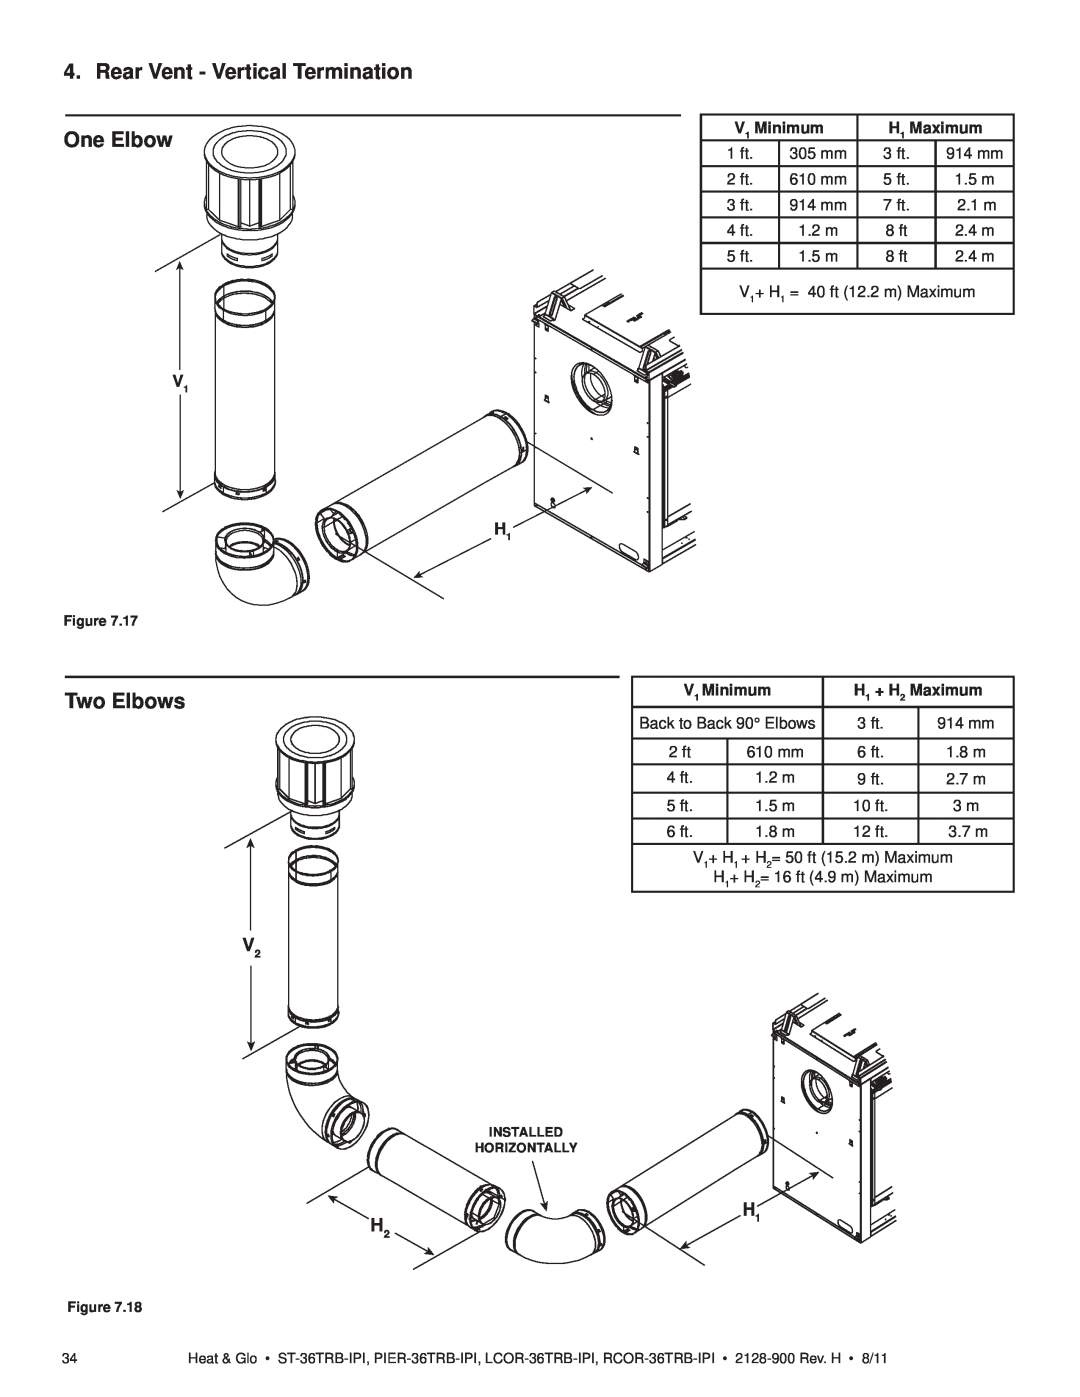 Heat & Glo LifeStyle ST-36TRB-IPI Rear Vent - Vertical Termination One Elbow, Two Elbows, V1 Minimum, H1 Maximum 